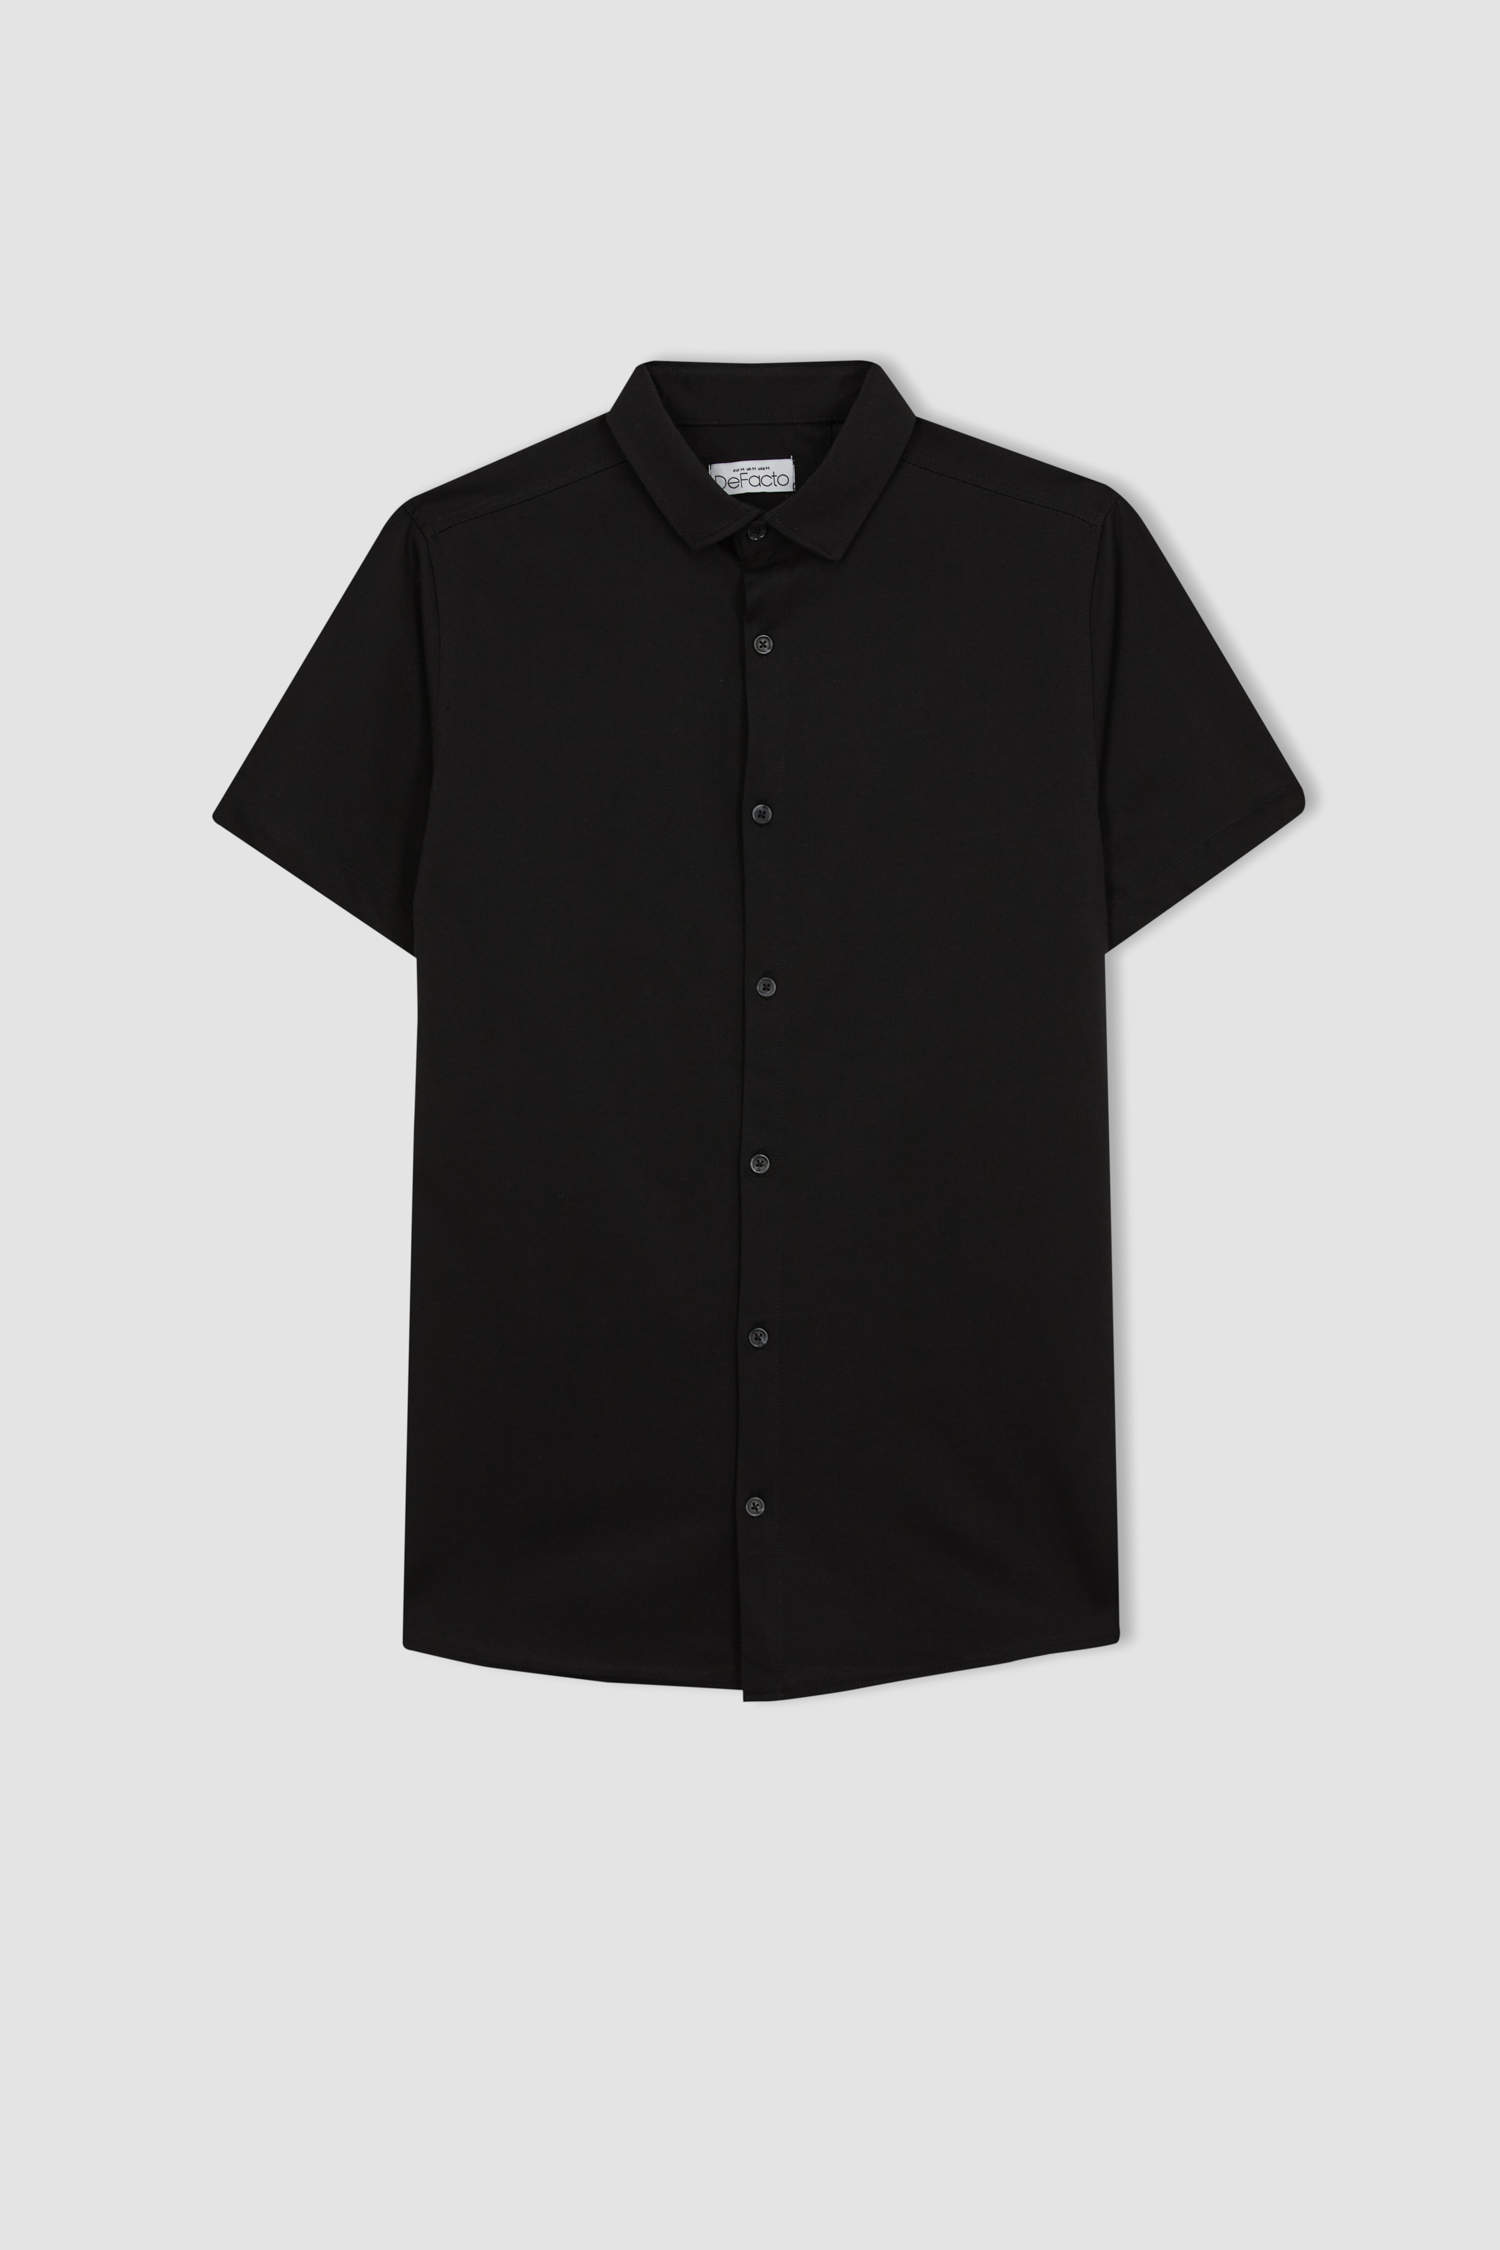 Black Man Slim Fit Short Sleeve Shirt 2910054 | DeFacto